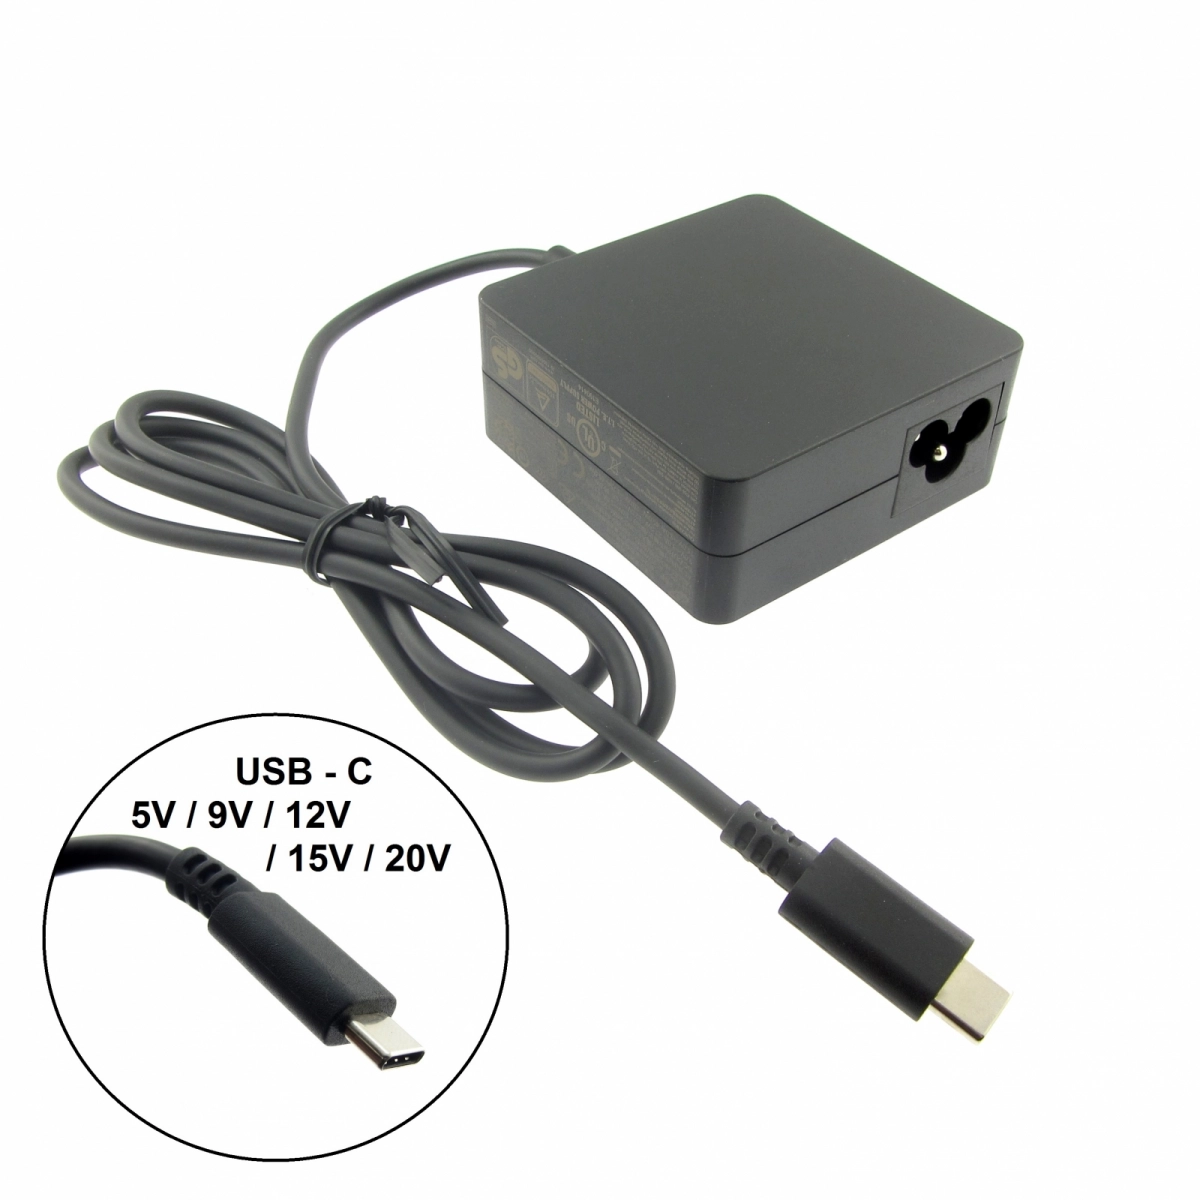 FSP Original Netzteil Typ FSP065-A1BR3, 20V, 3.25A, Stecker USB-C, EU-Version